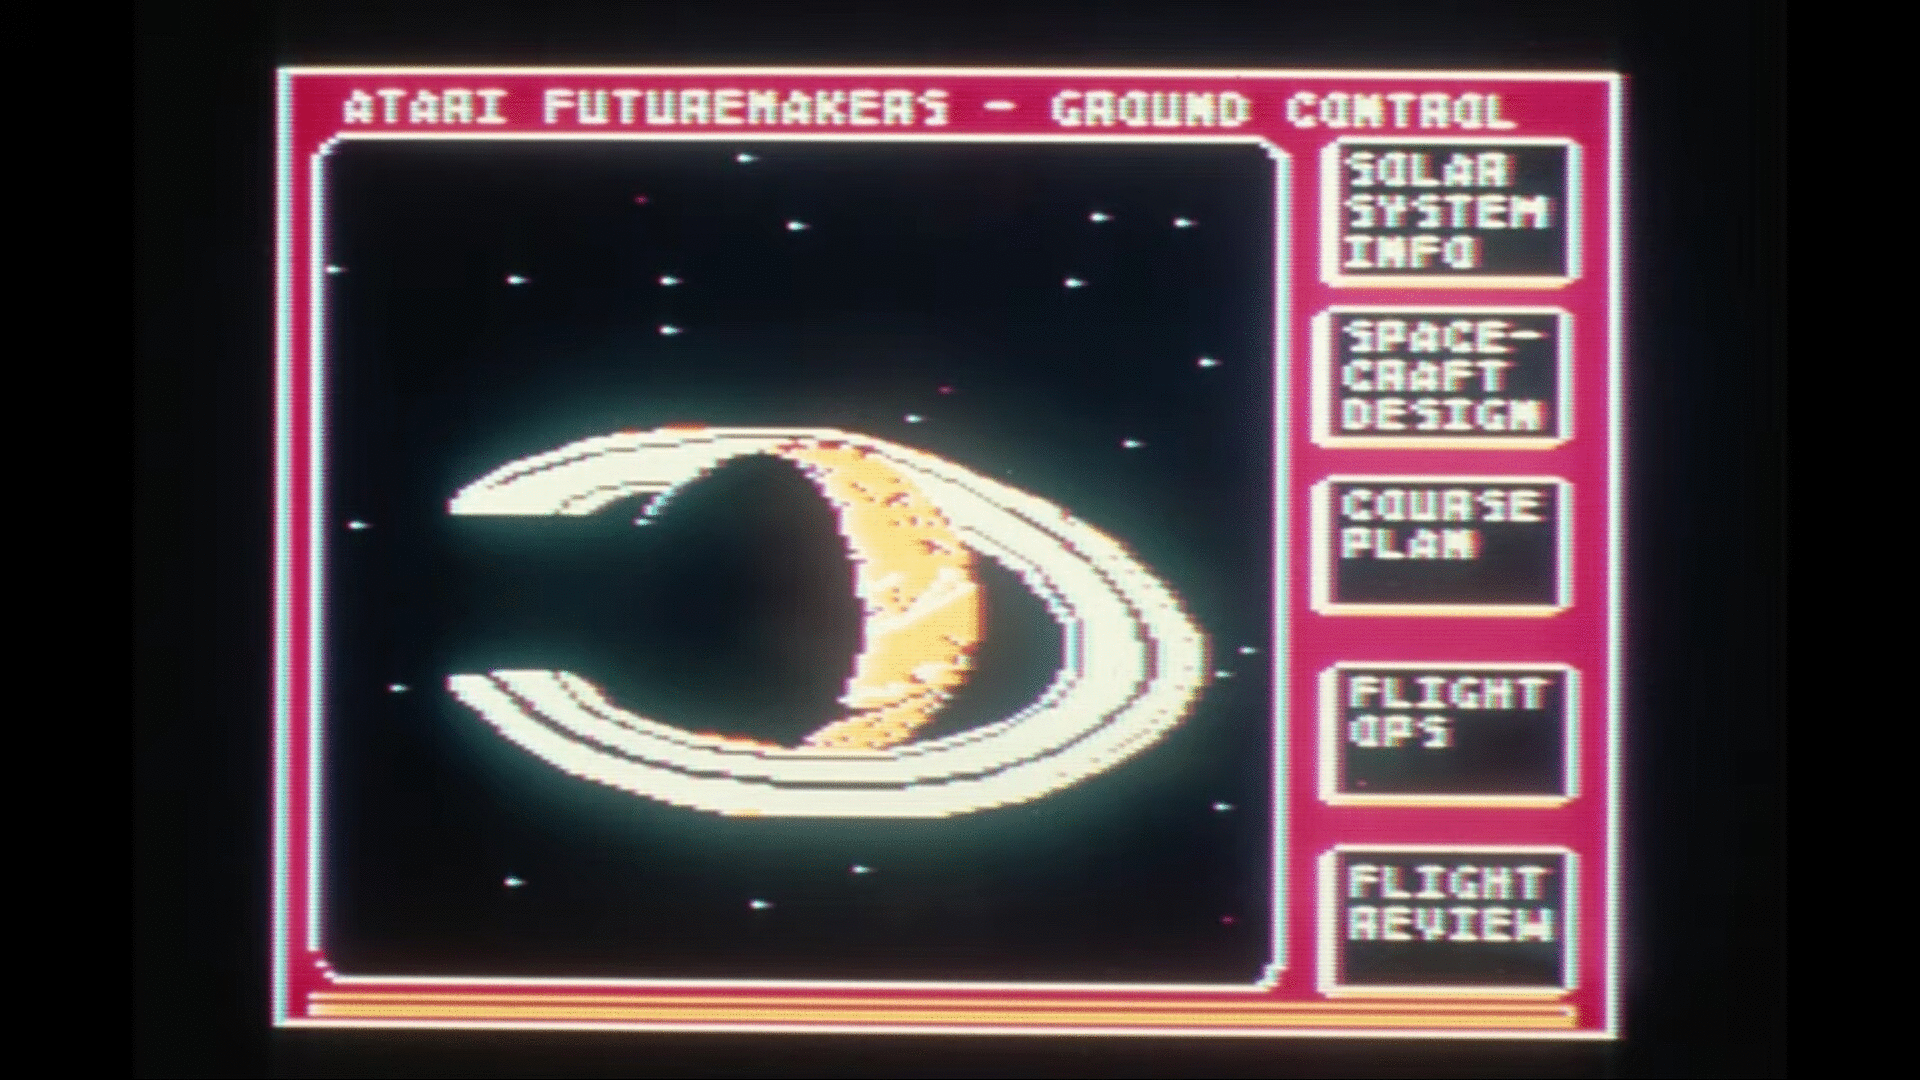 FutureMakers - This Is Ground Control atari screenshot